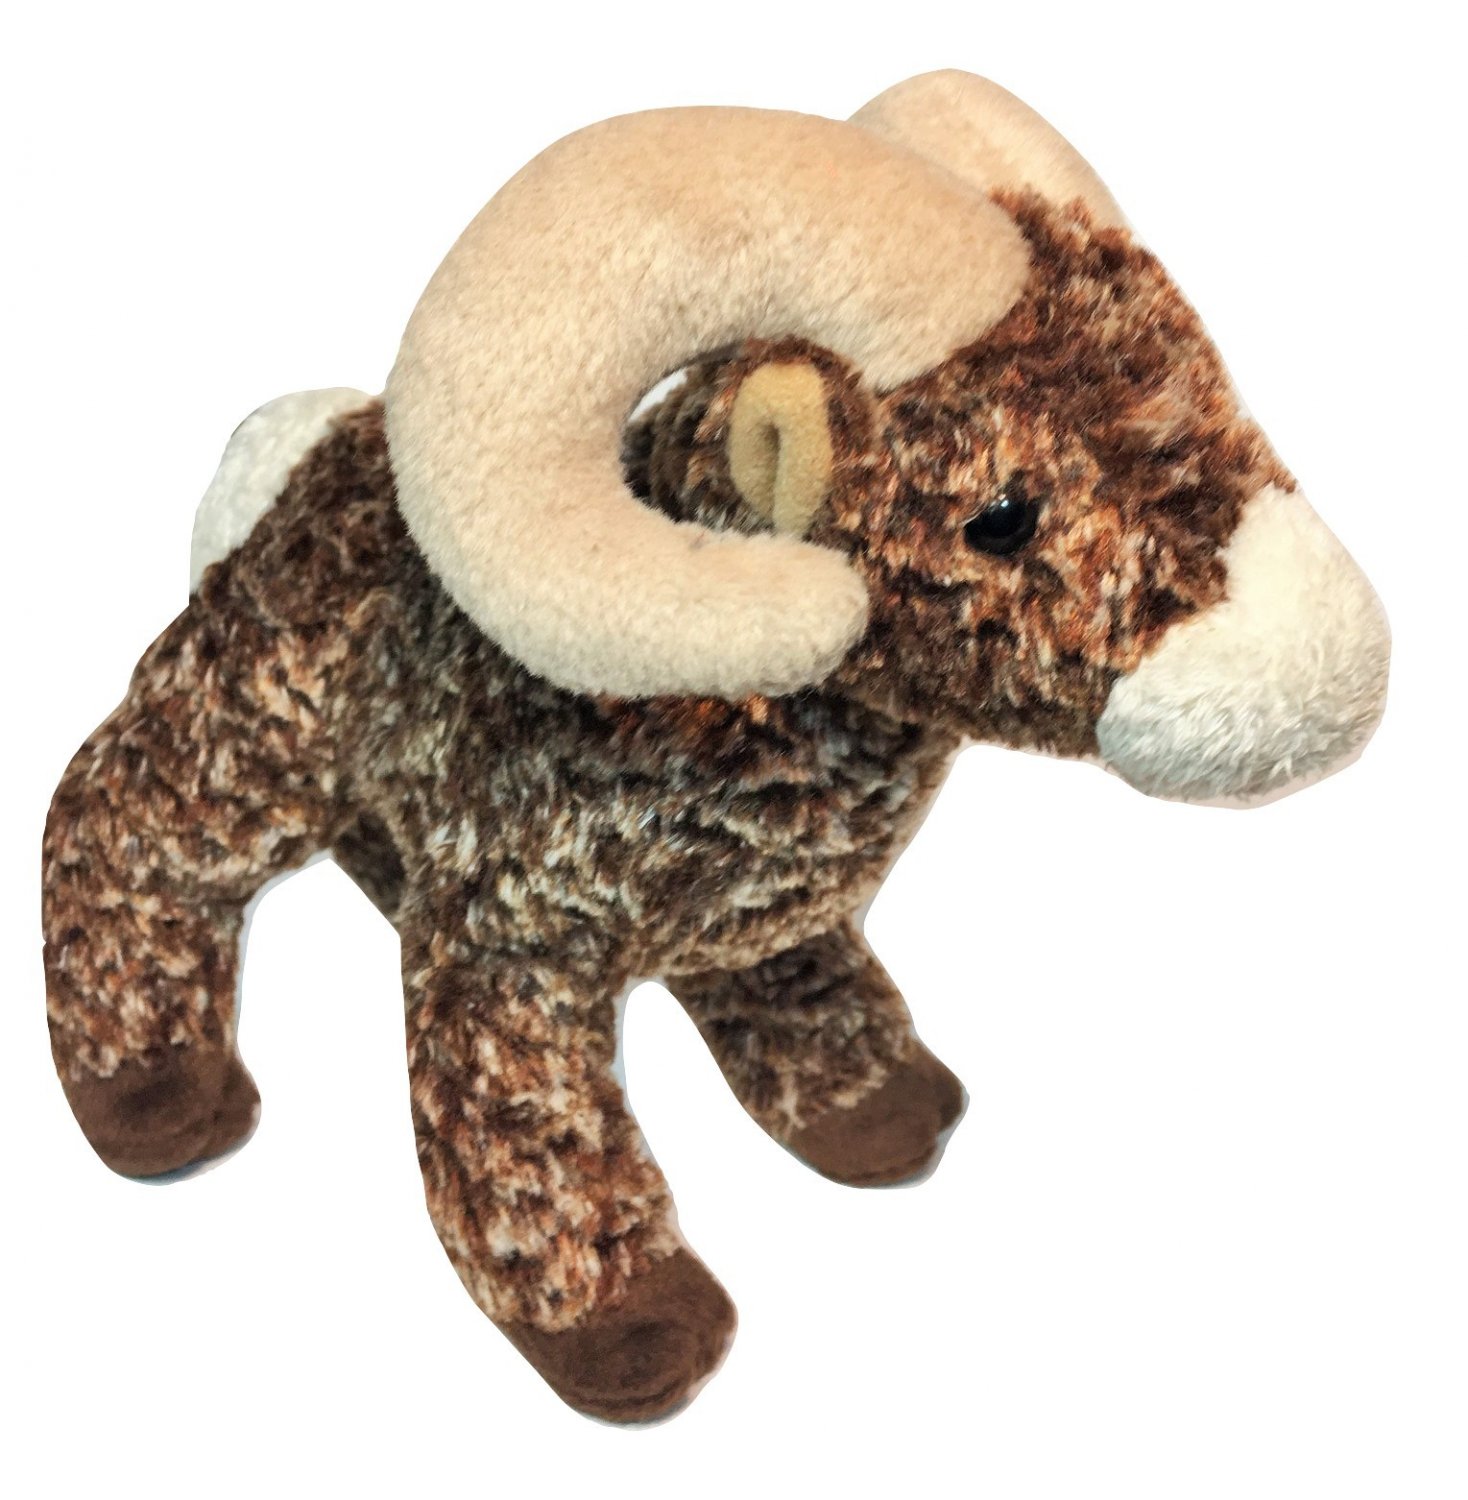 Douglas Climber Bighorn Sheep Plush Brown Bean Bag Stuffed Animal Toy 8"